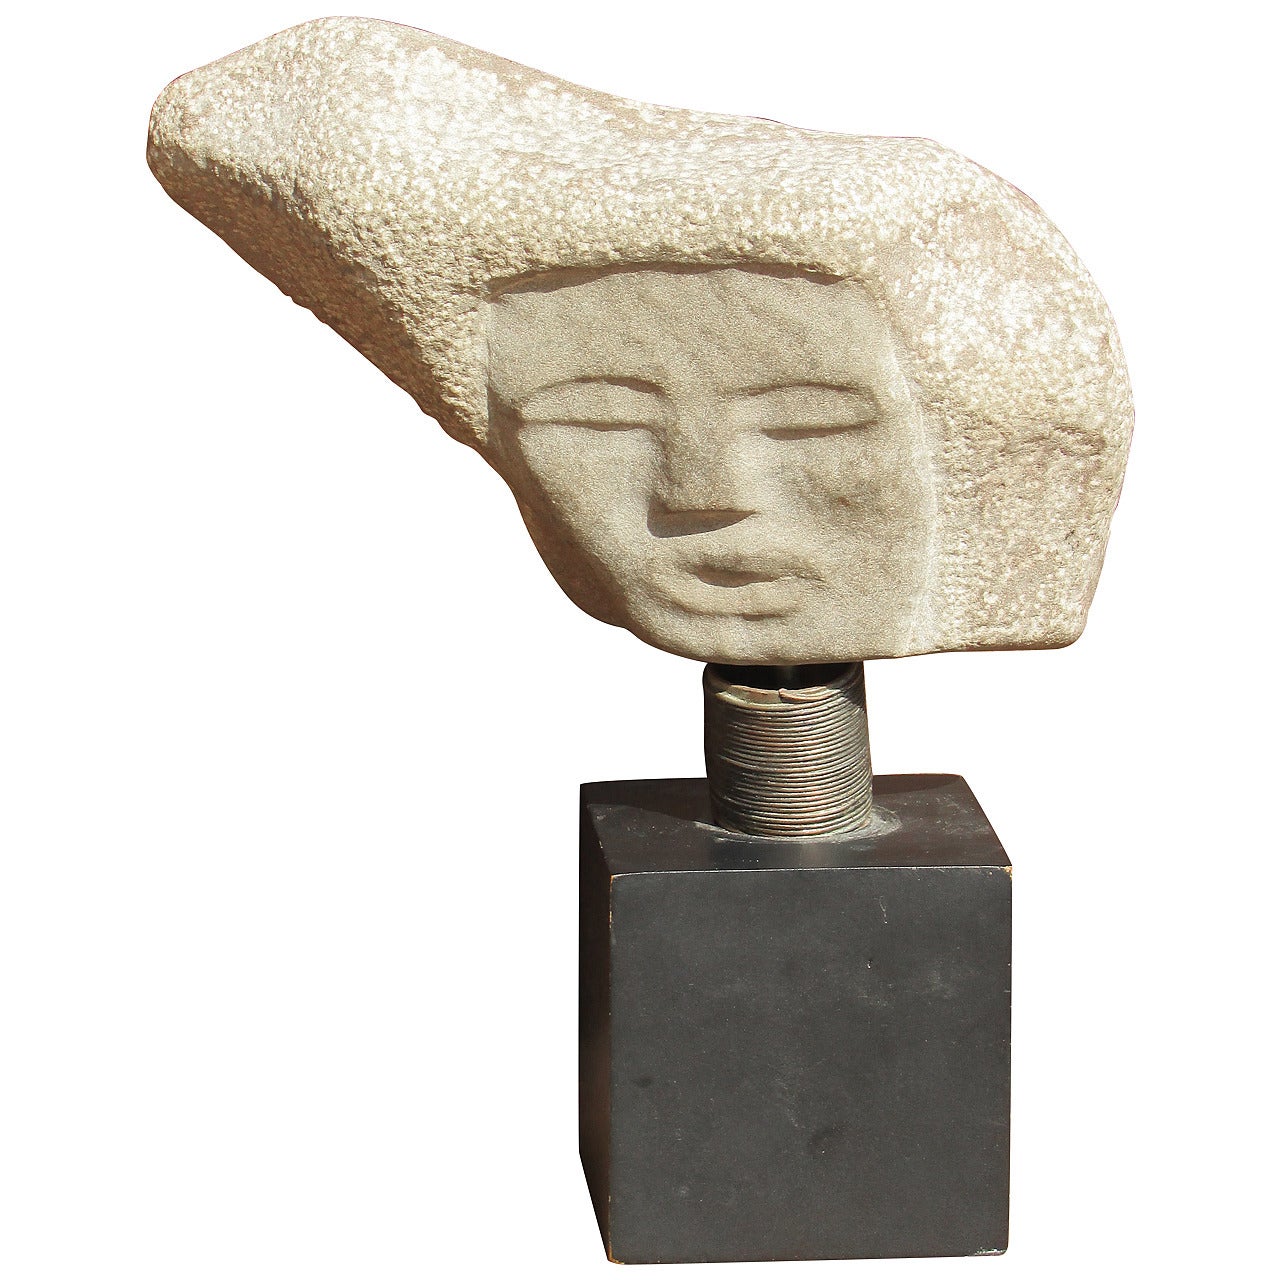 Primitive Modern Carved Stone Sculpture